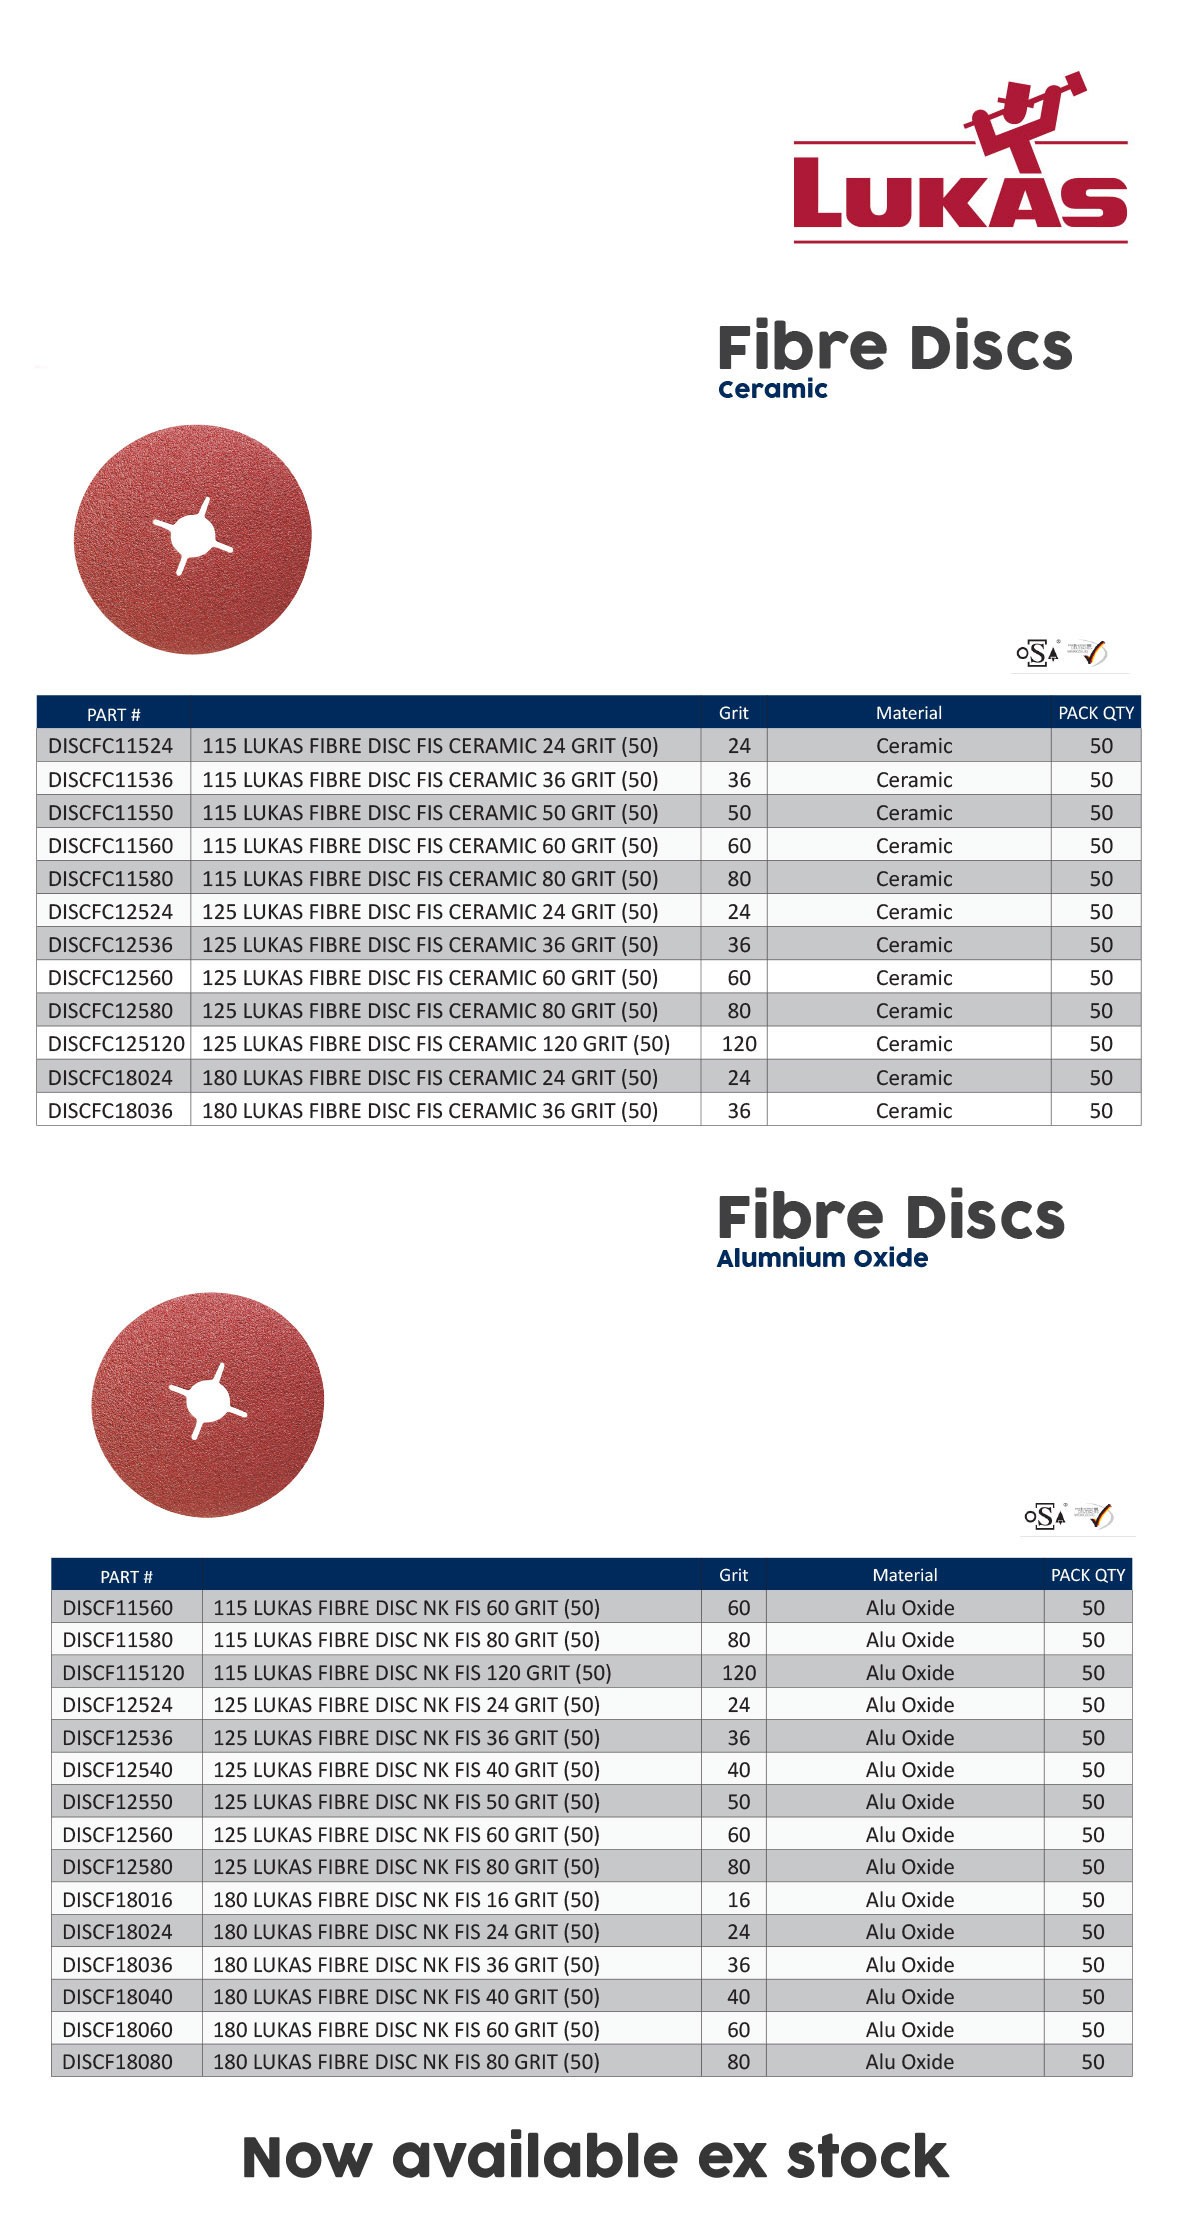 Lukas-fibre-discs